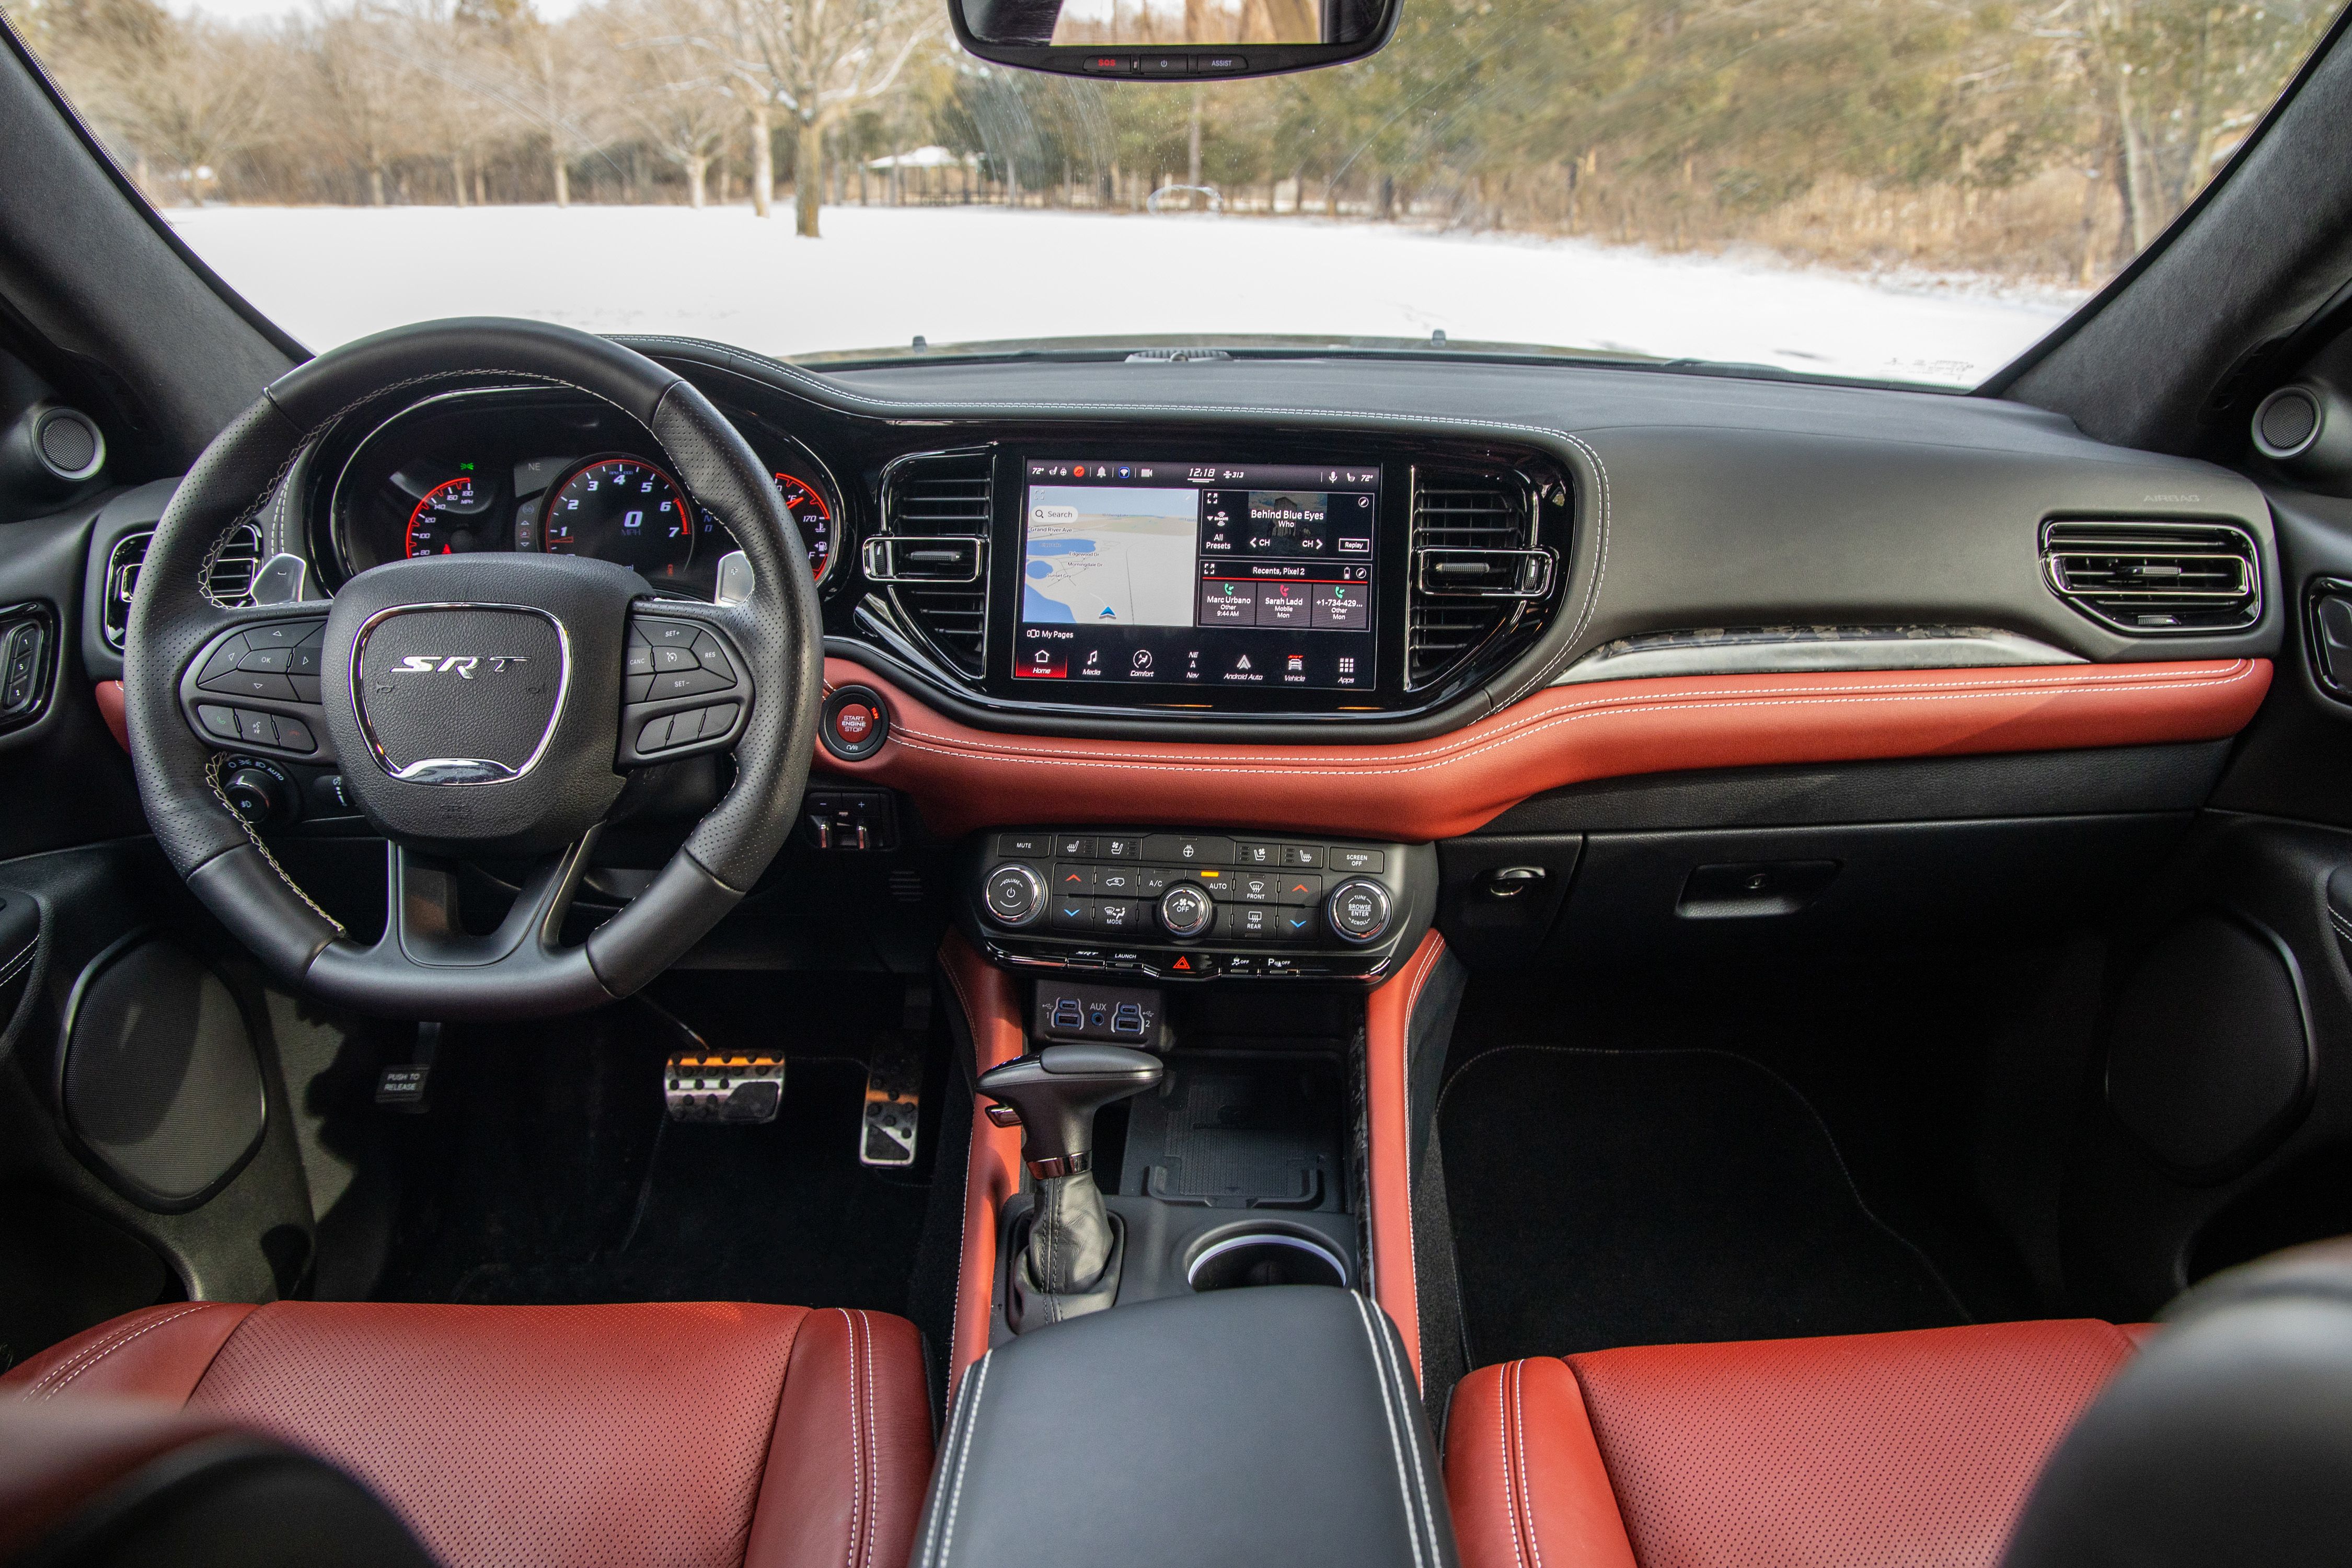 Road test of the 2019 Dodge Durango | Car Reviews | Auto123